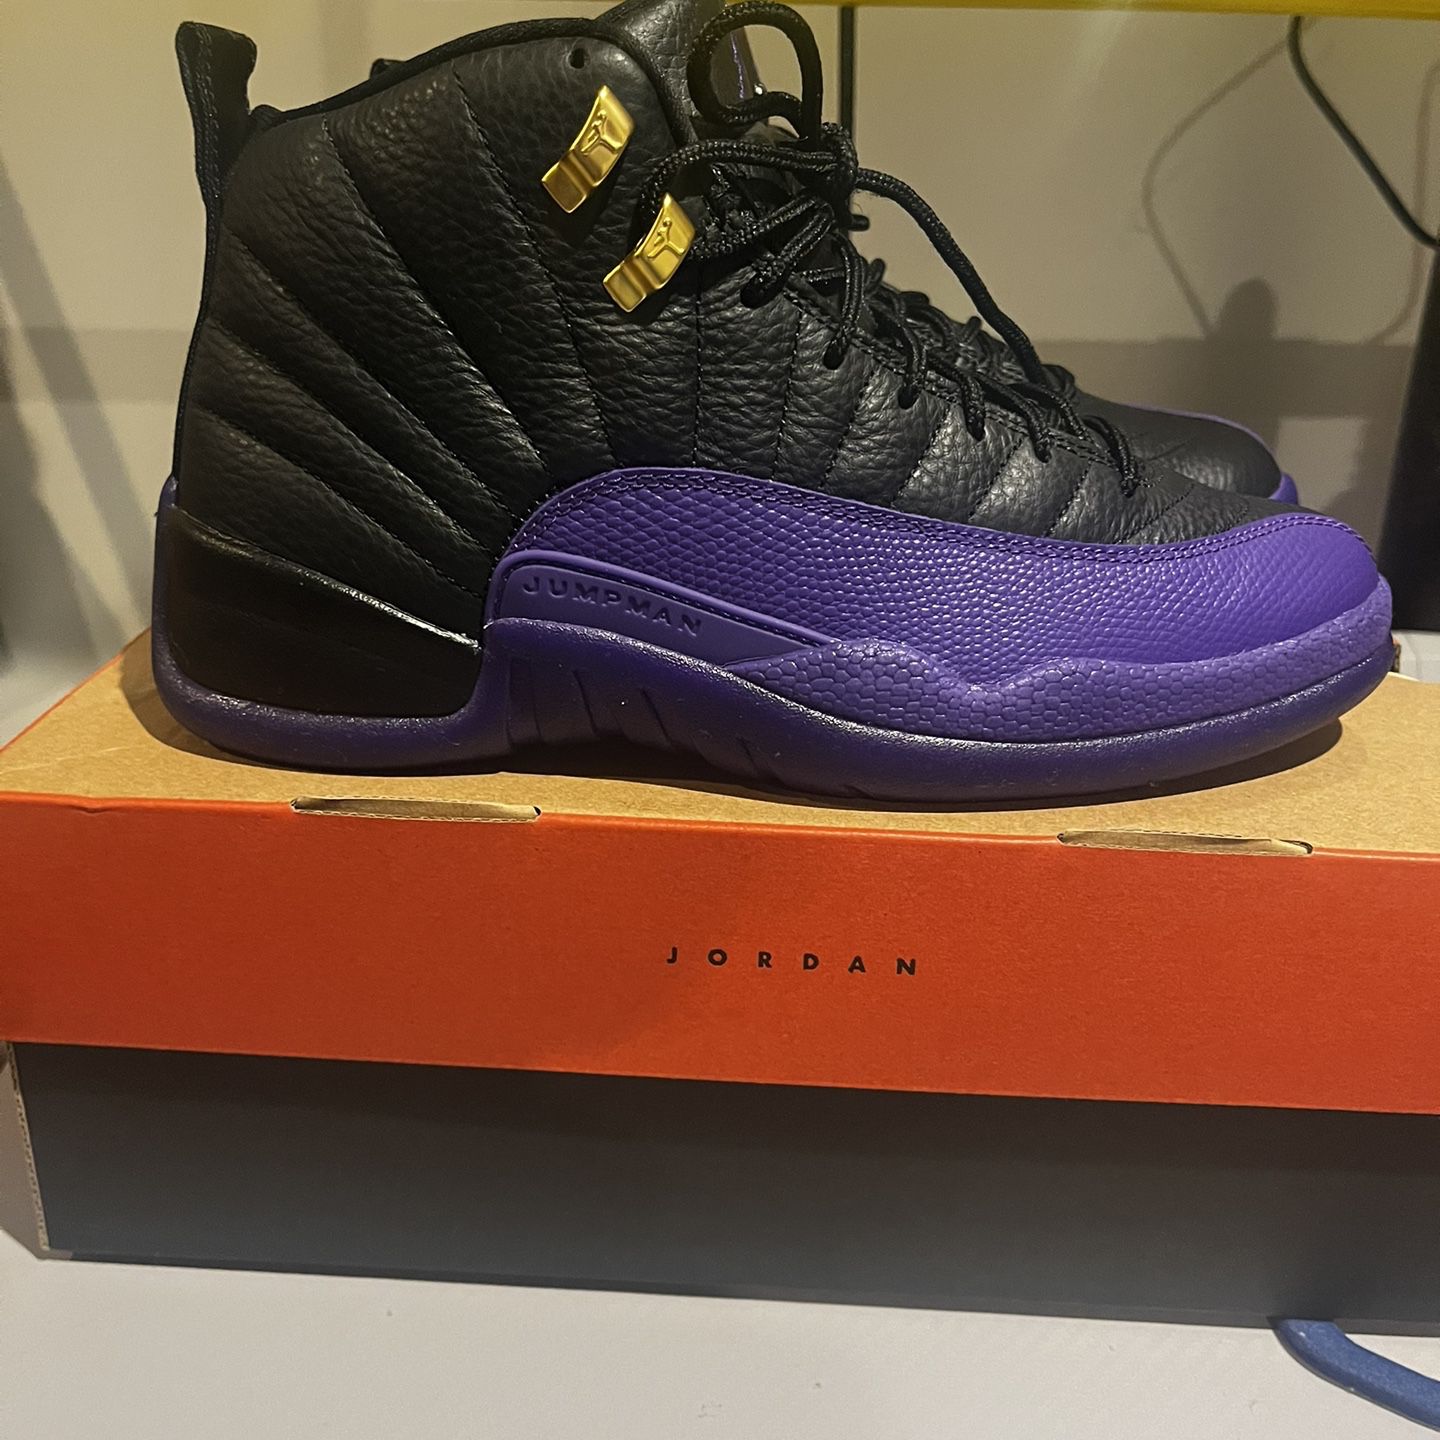 Air Jordan Retro 12s Field Purple With Box Good Condition Size 8 Men’s /Used